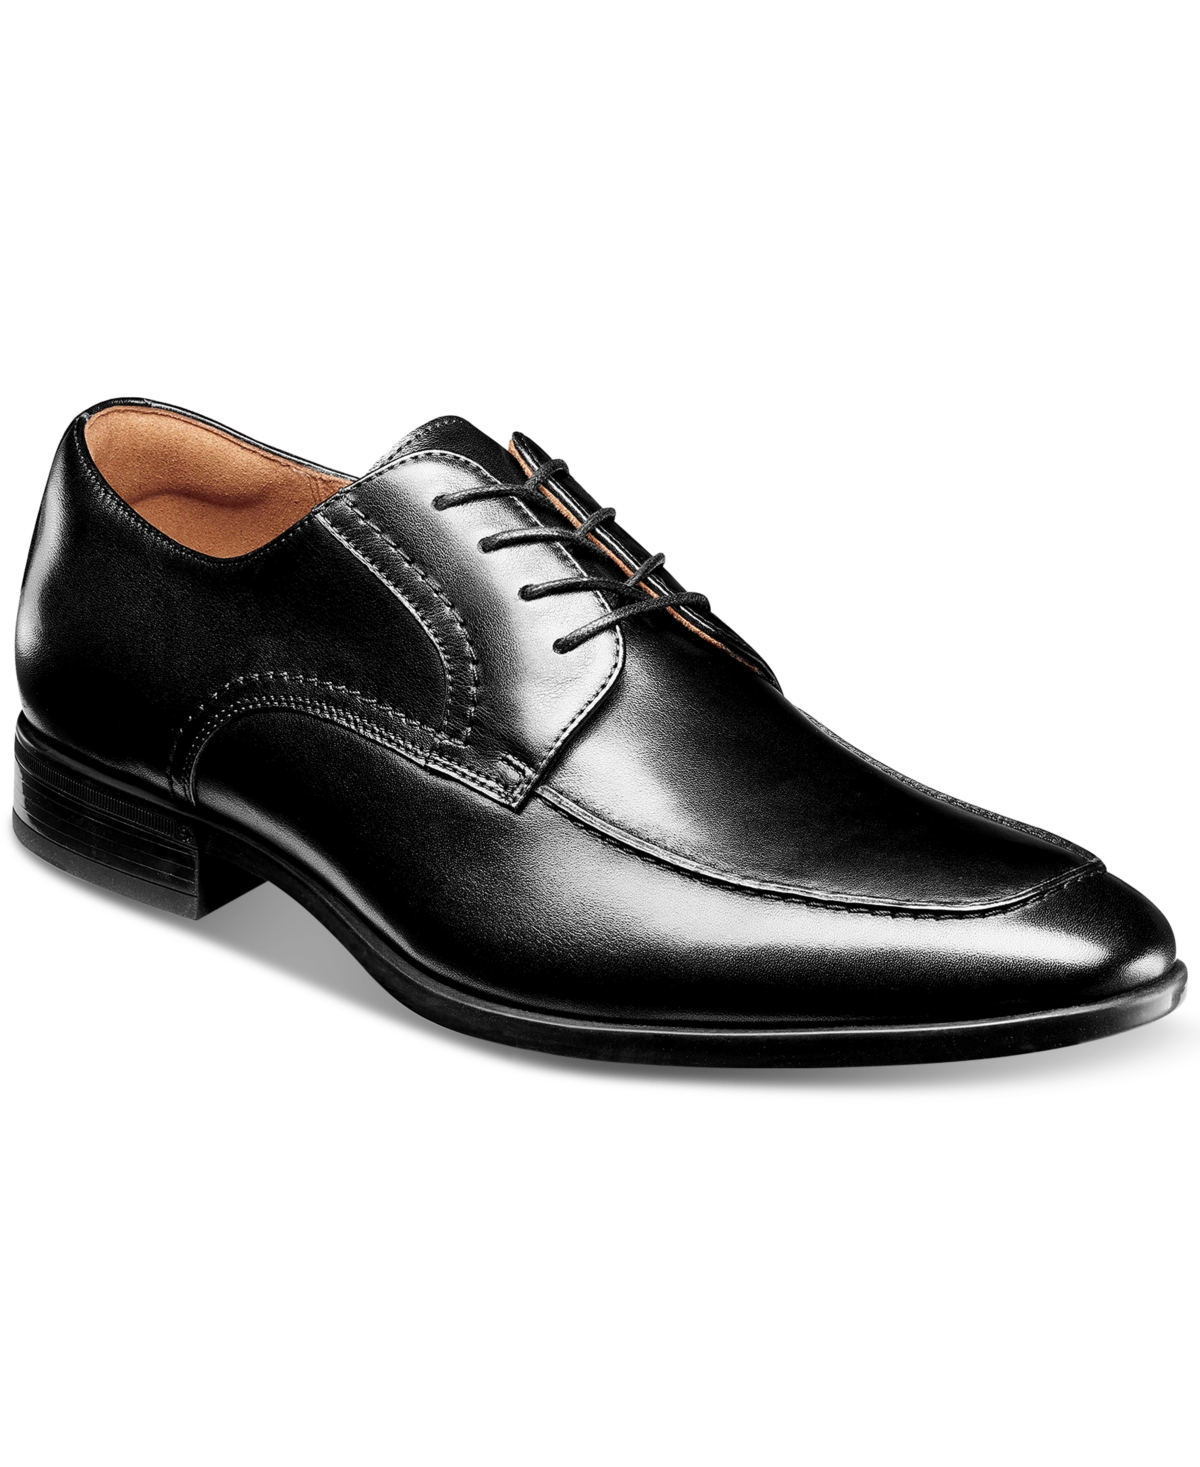 Men's Pregamo Moc-Toe Oxford Dress Shoe - Black